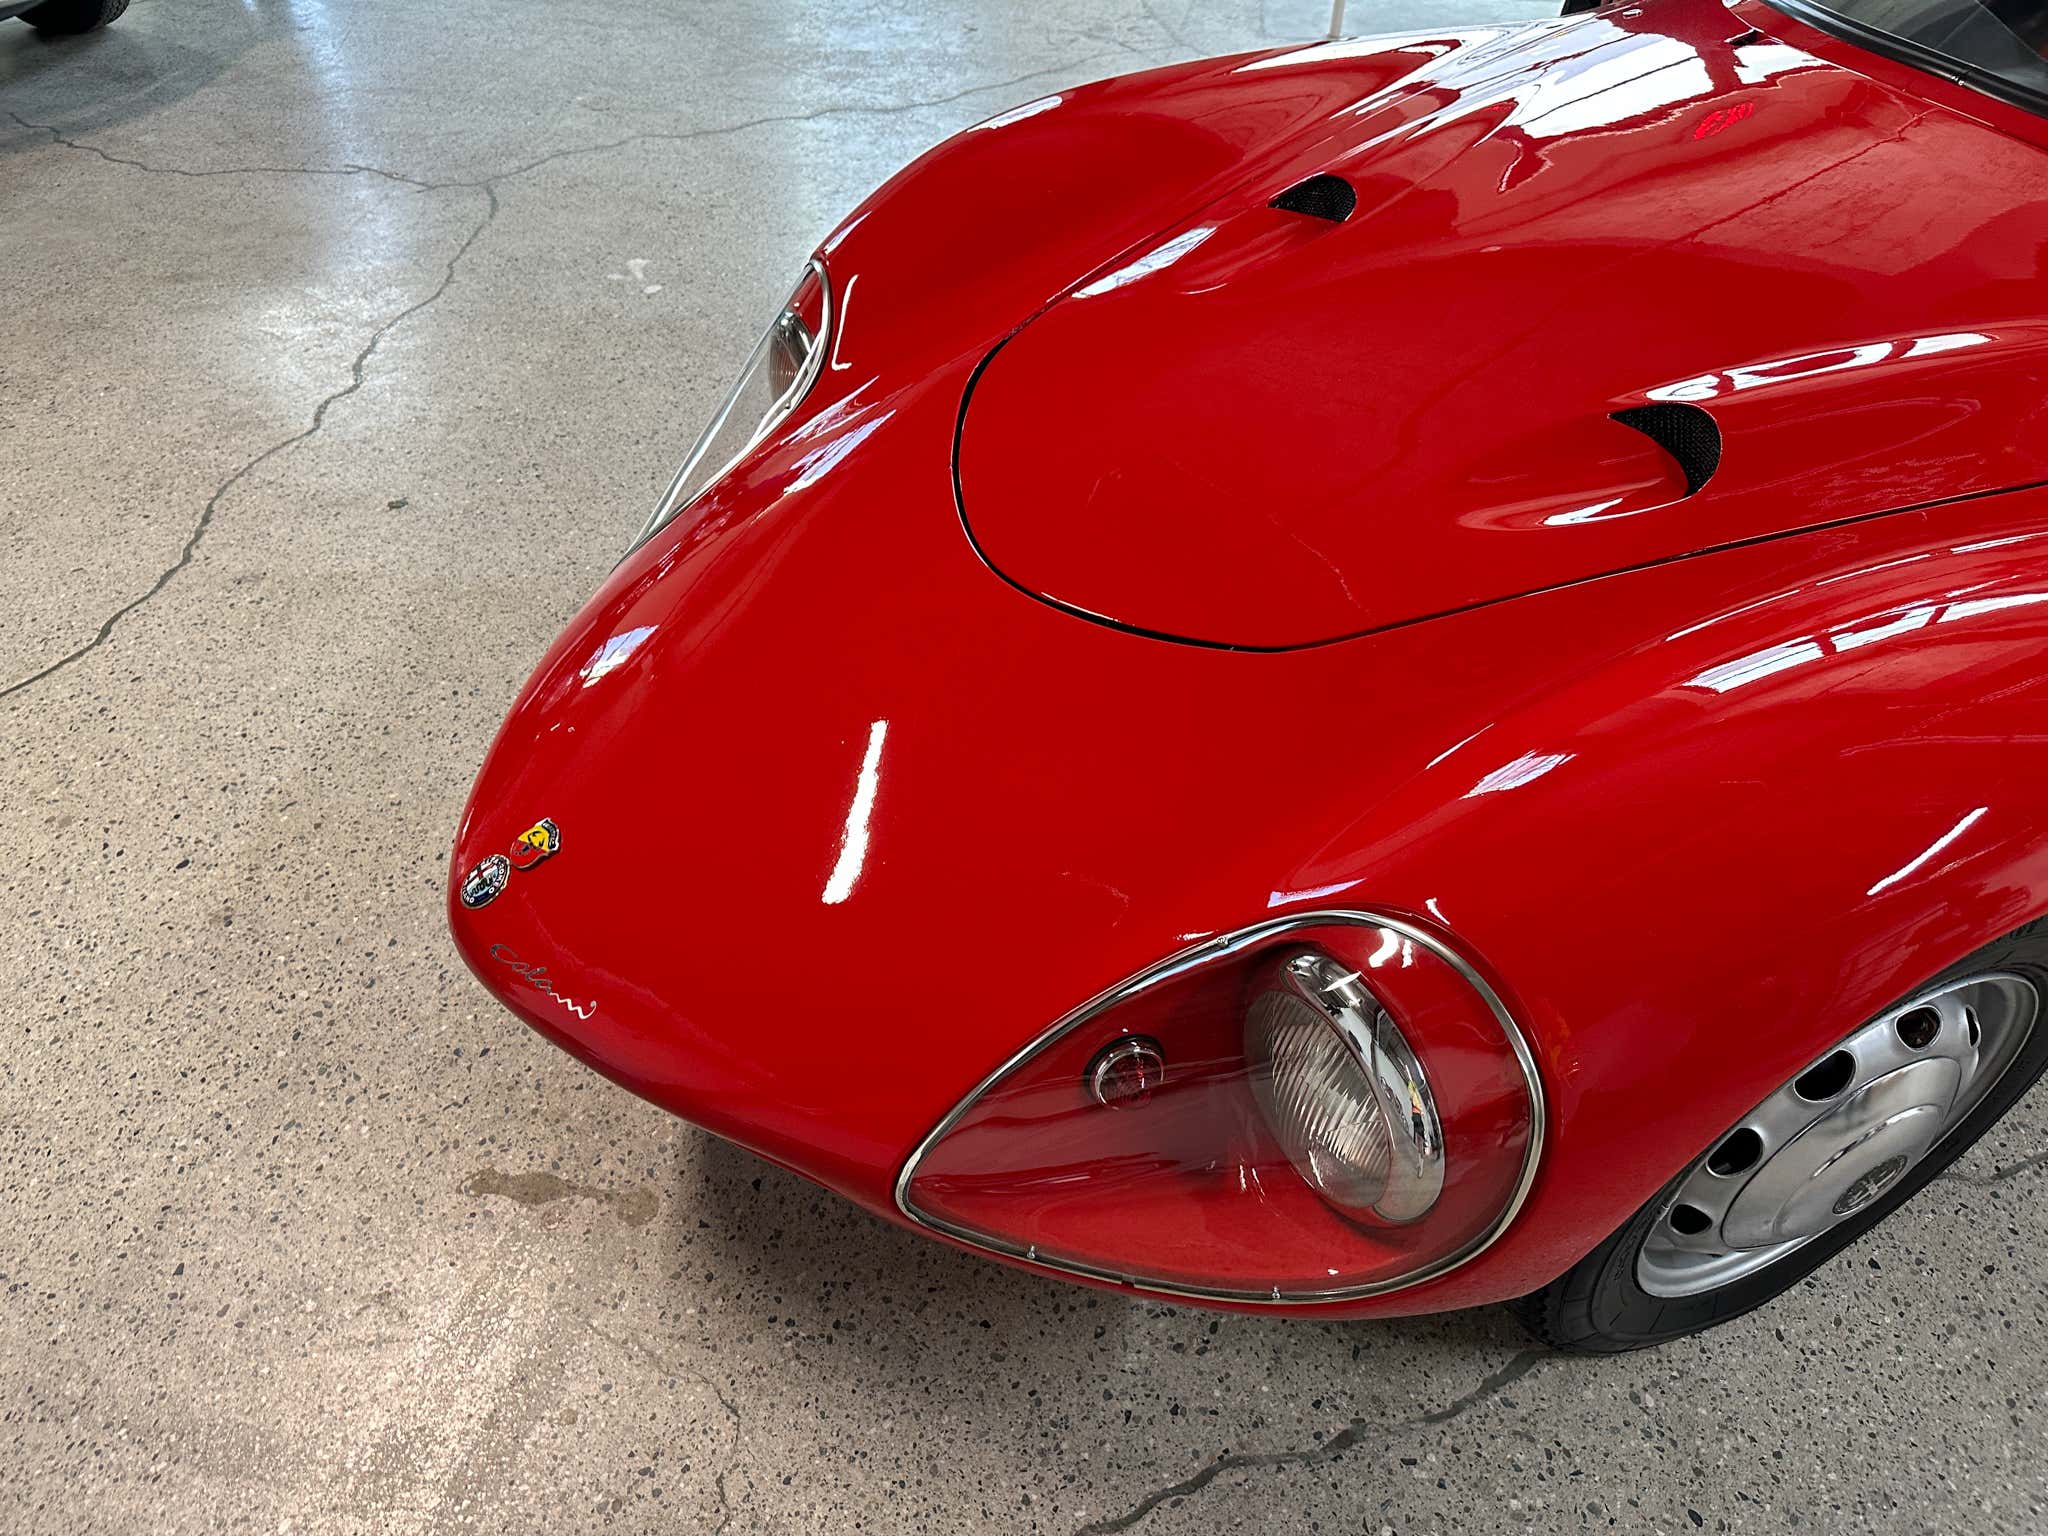 Detailaufnahme der Motorhaube eines roten Luigi Colani Abarth-Alfa Romeo